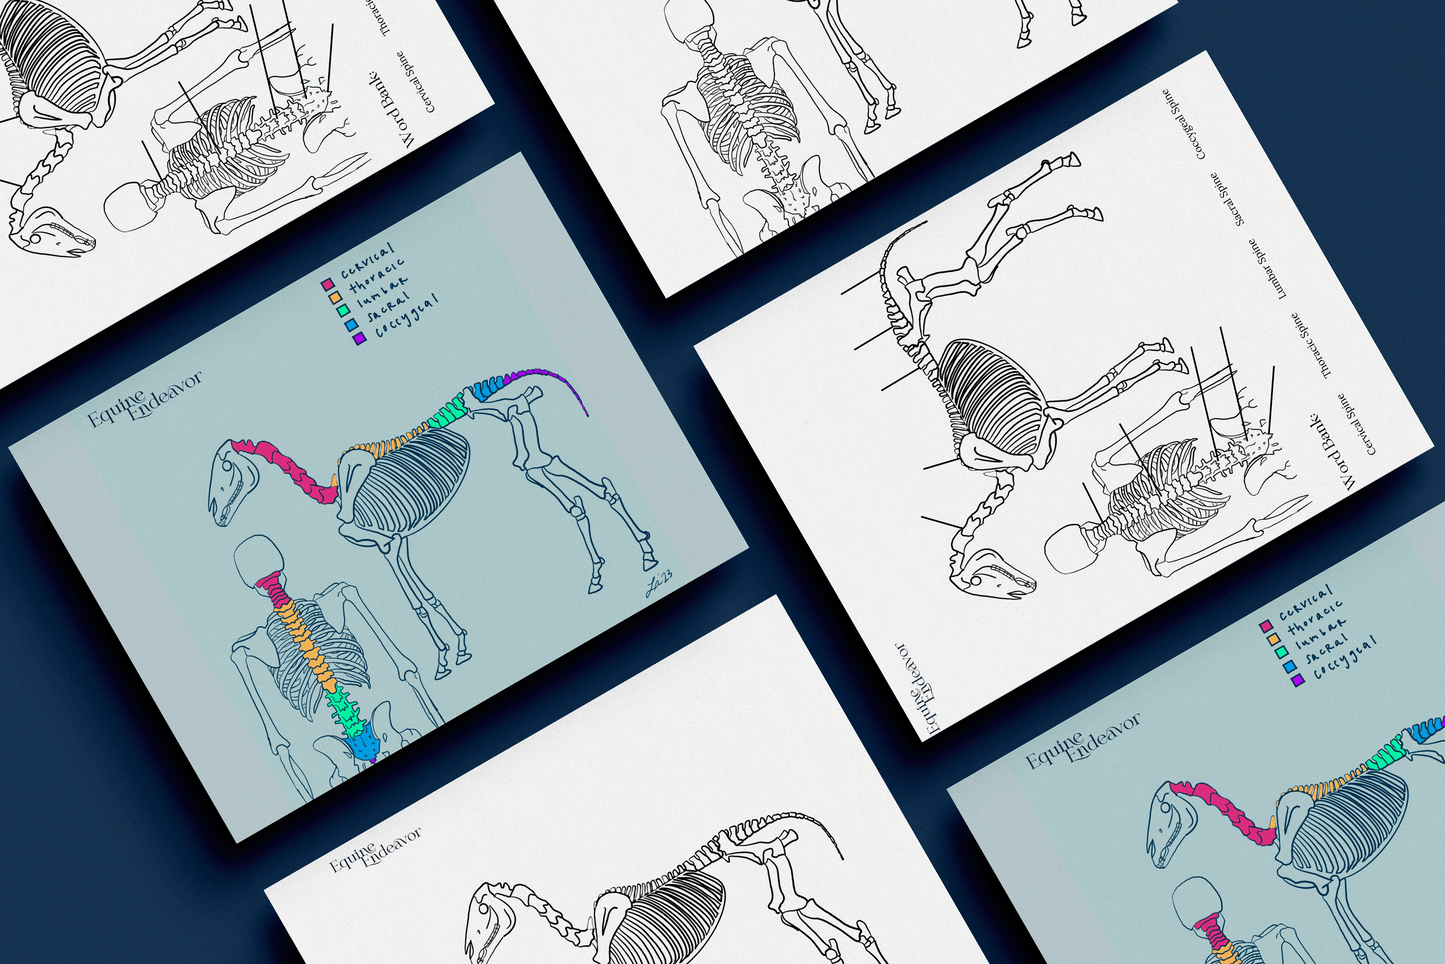 Equine & Human Skeleton Comparative Anatomy Series Illustrations & Worksheets